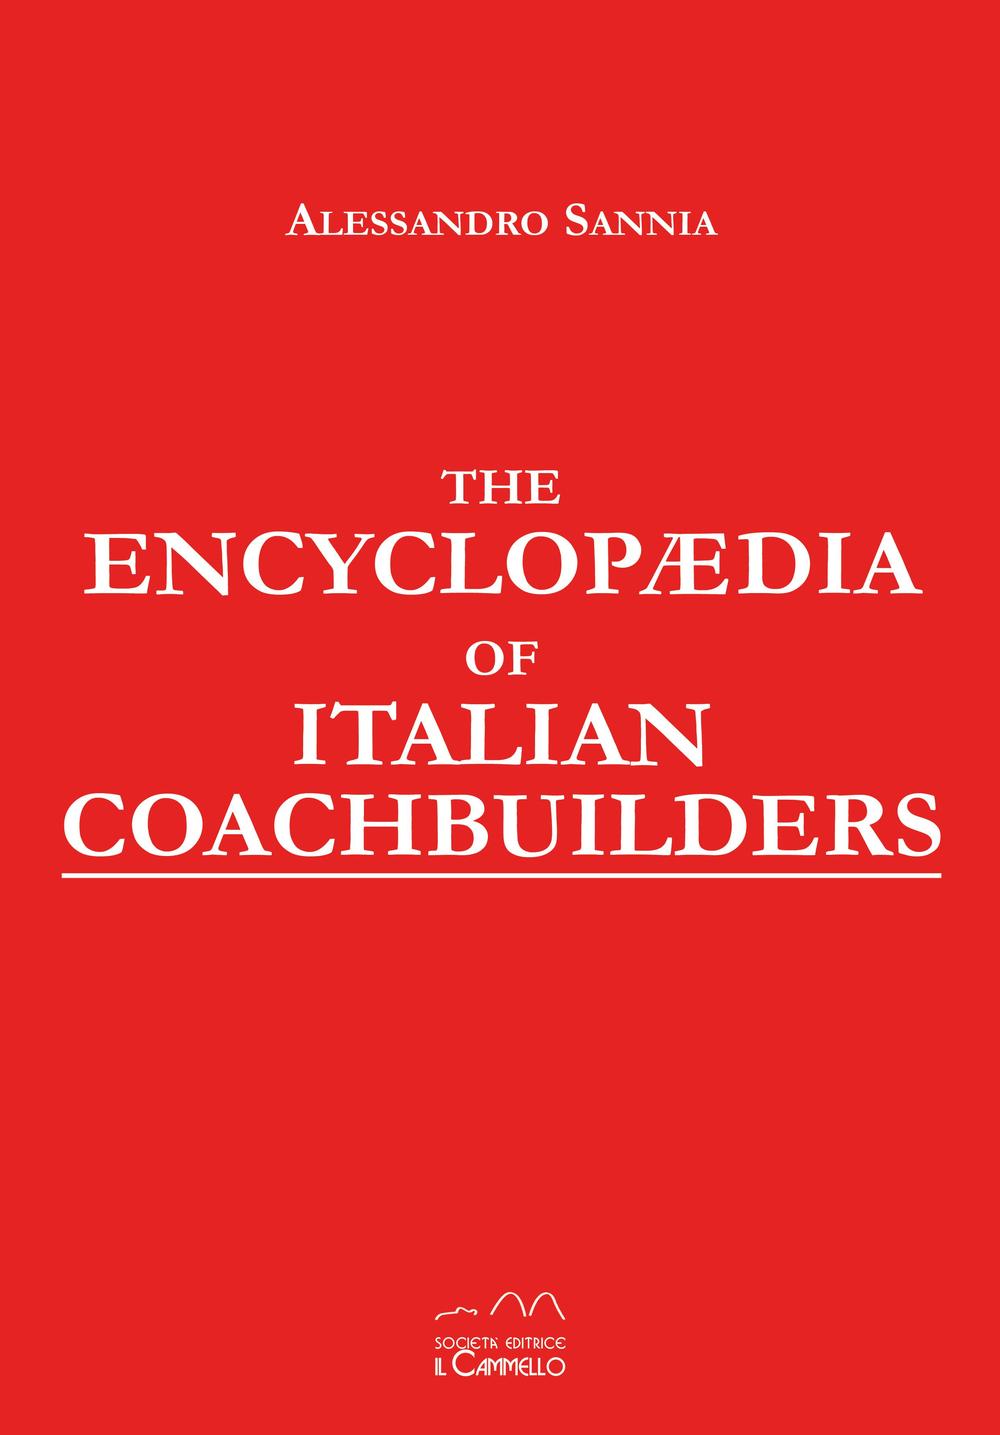 The encyclopaedia of italian coachbuilders. Collector's edition